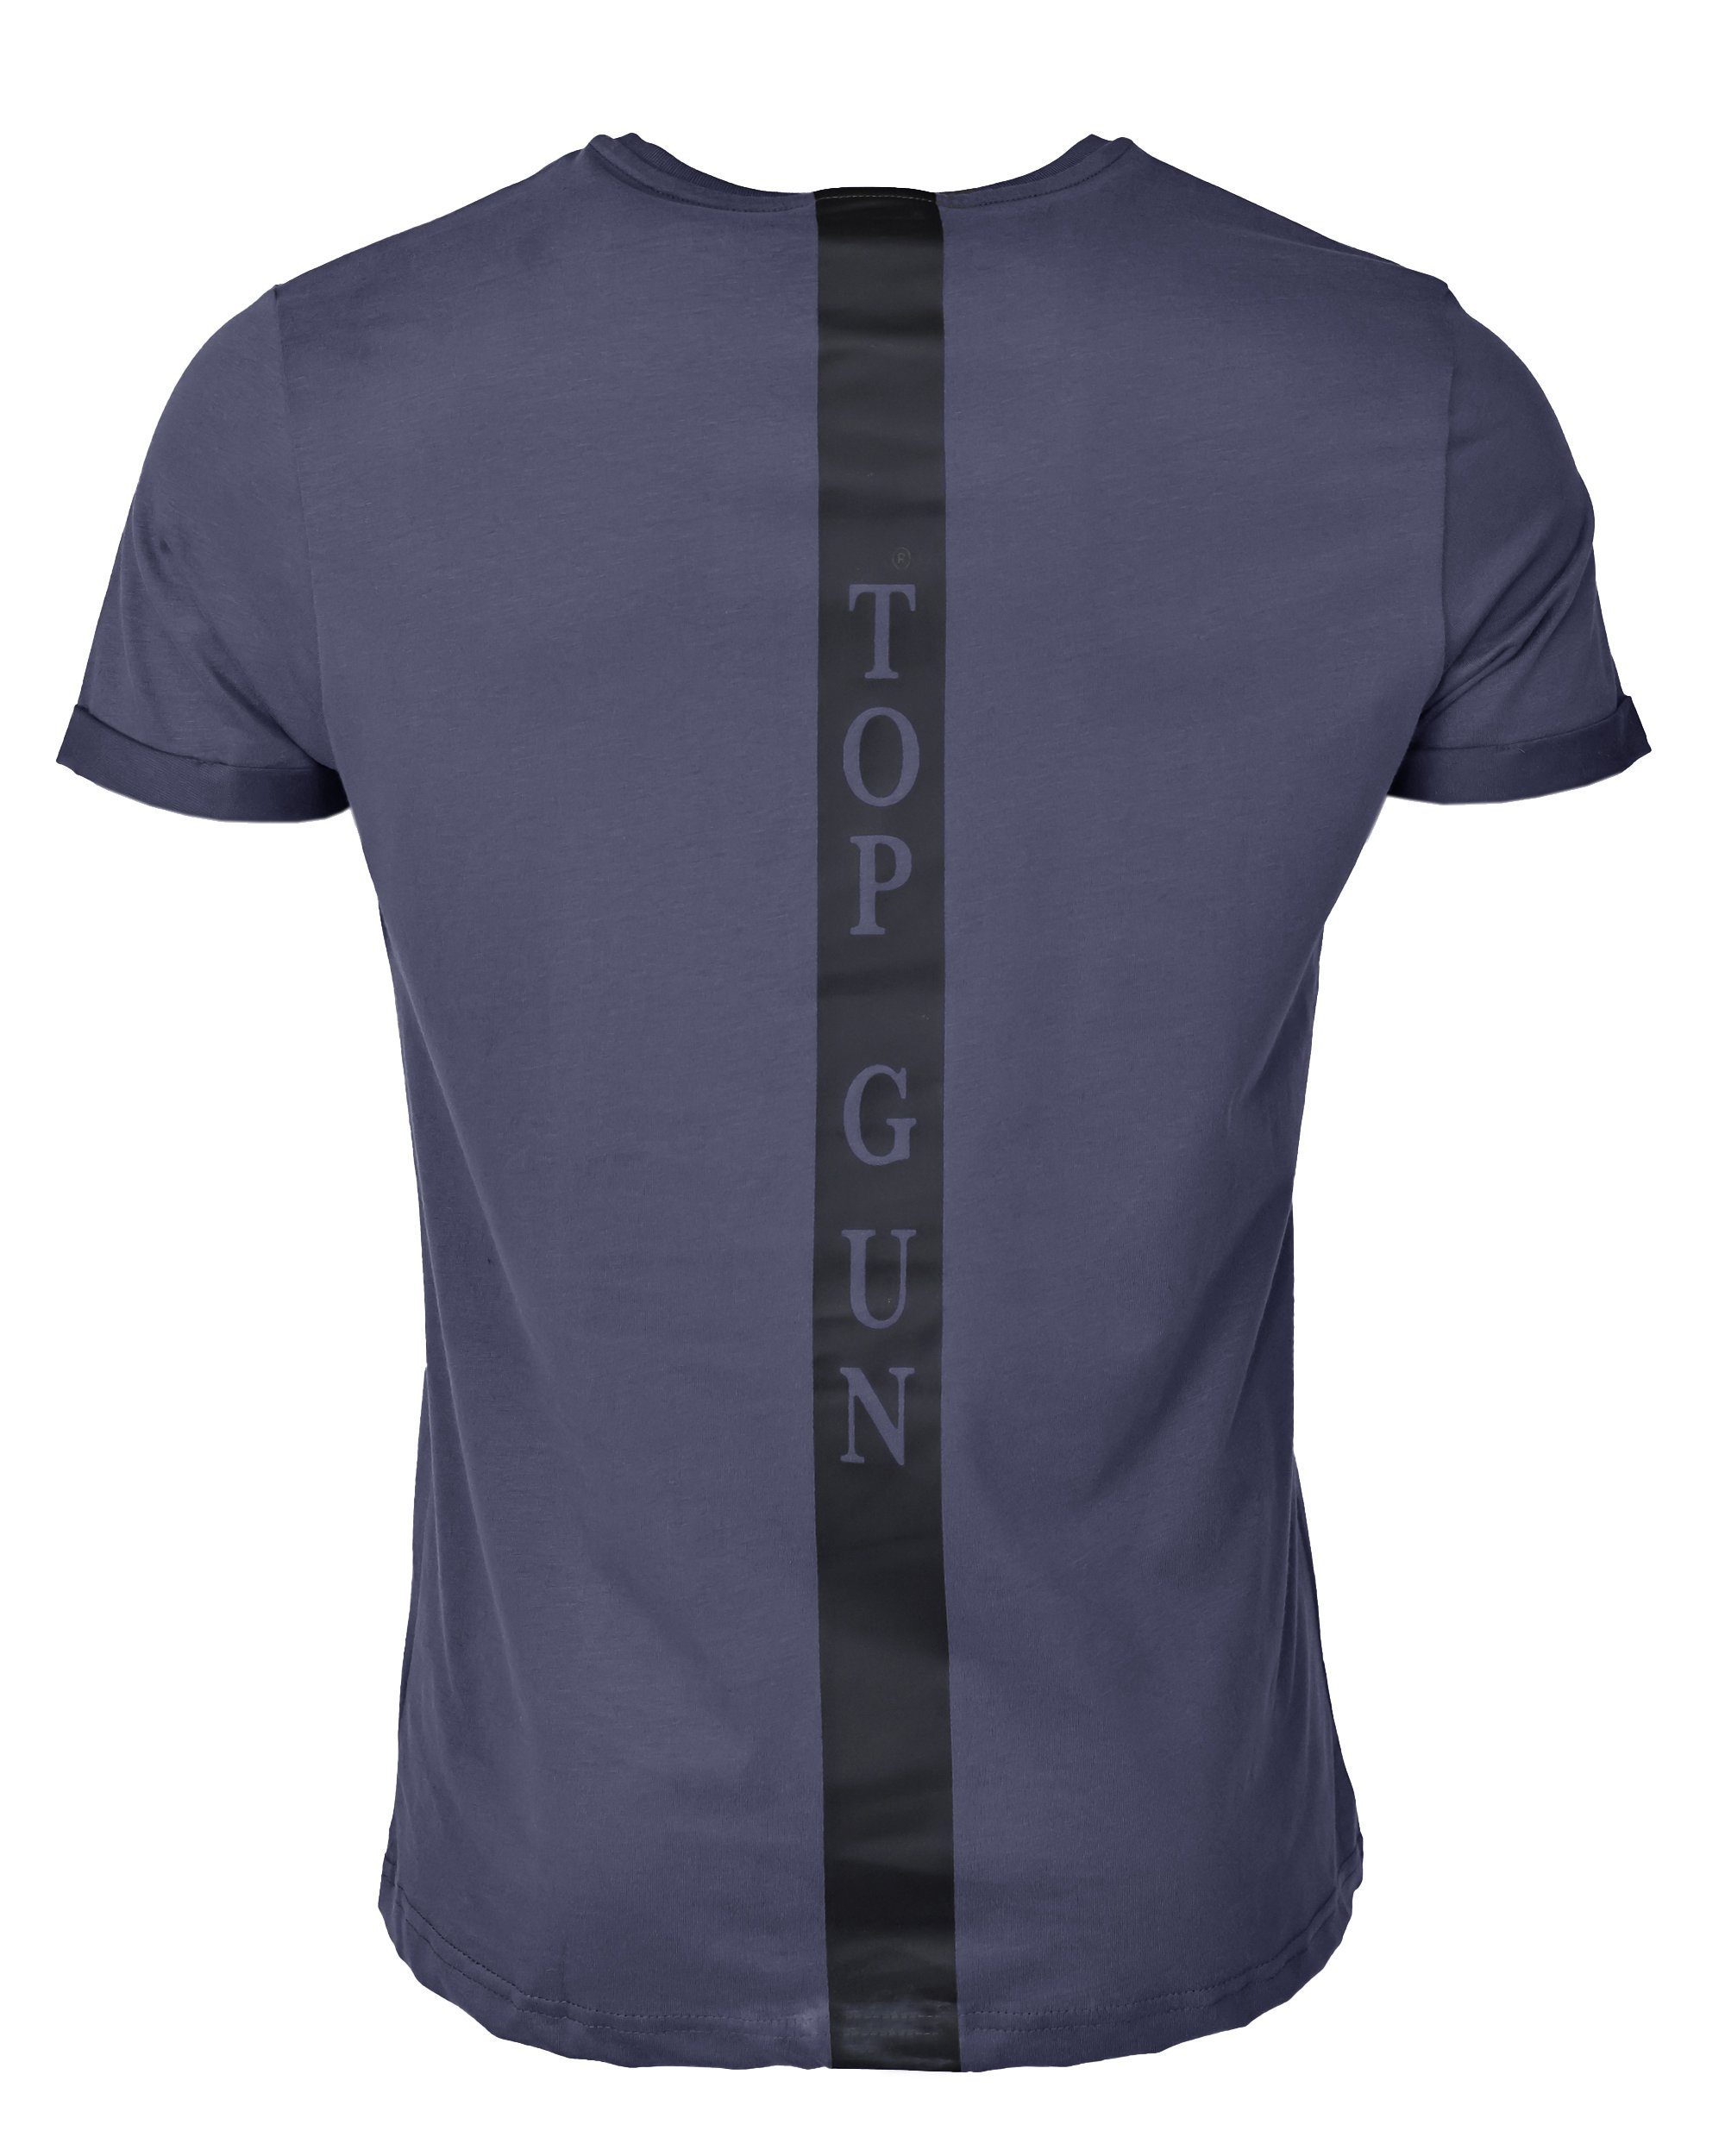 GUN navy TG20213011 TOP T-Shirt